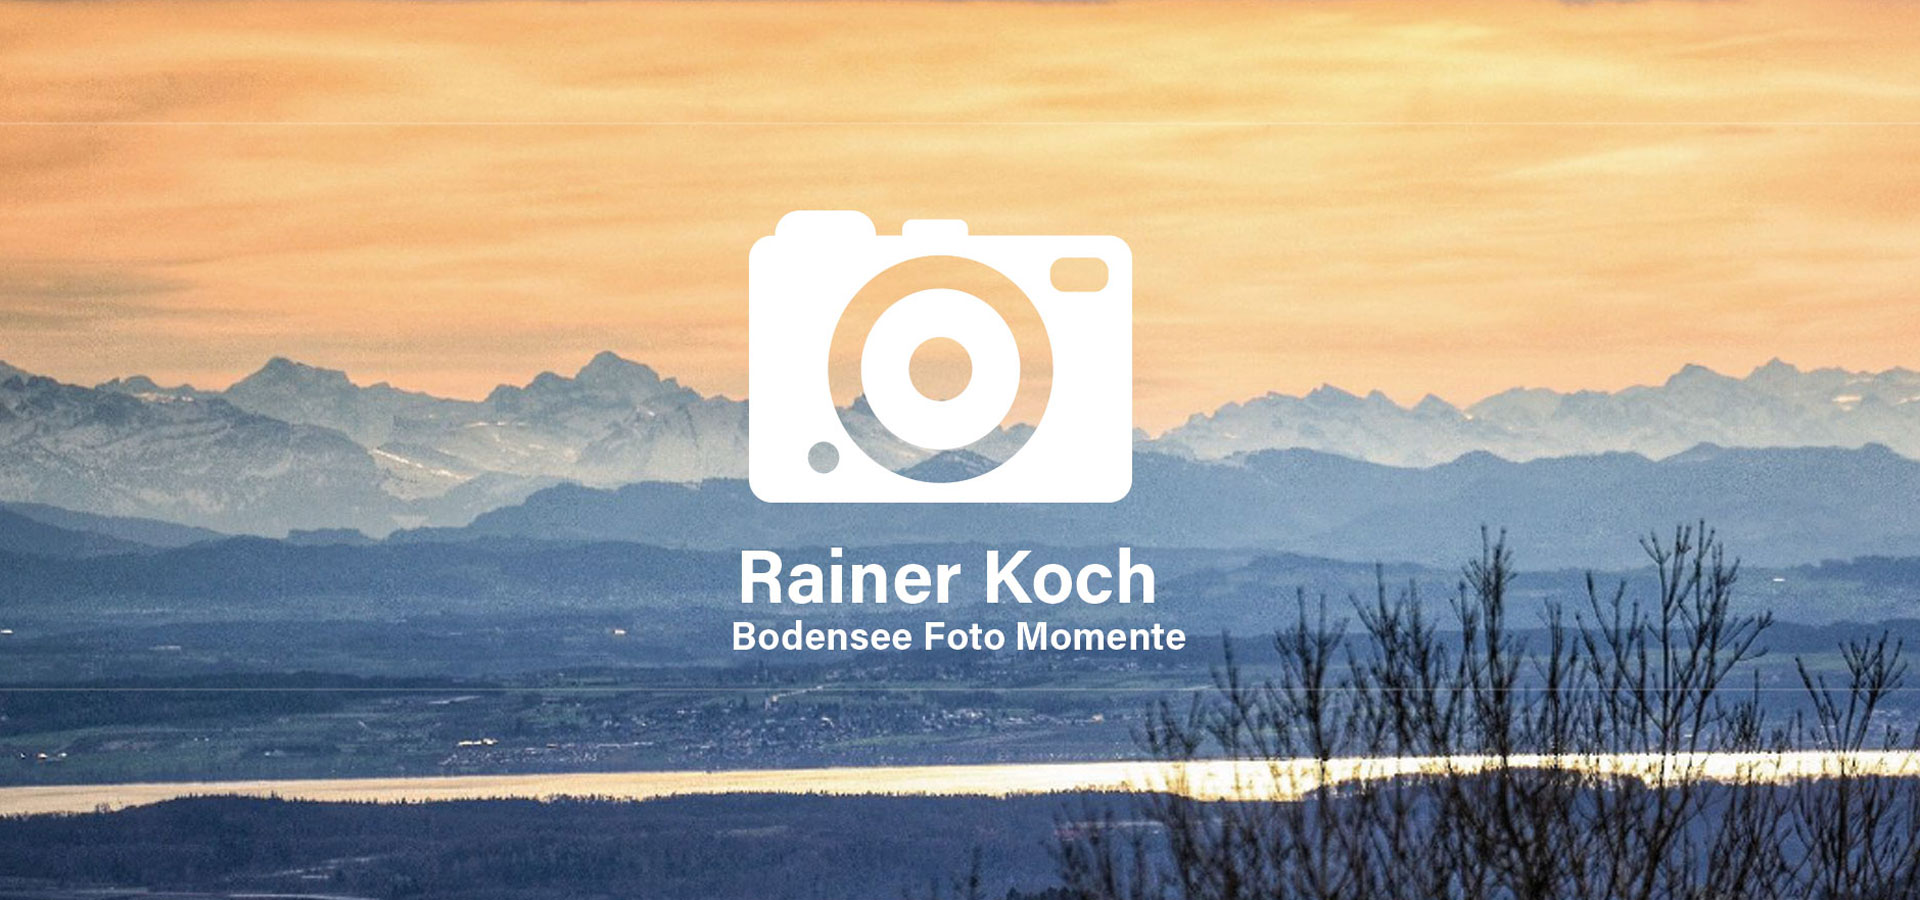 rainer-koch-bodenseefotomomente-fotografie-hochzeit-car-portrait-fasnet_01.jpg